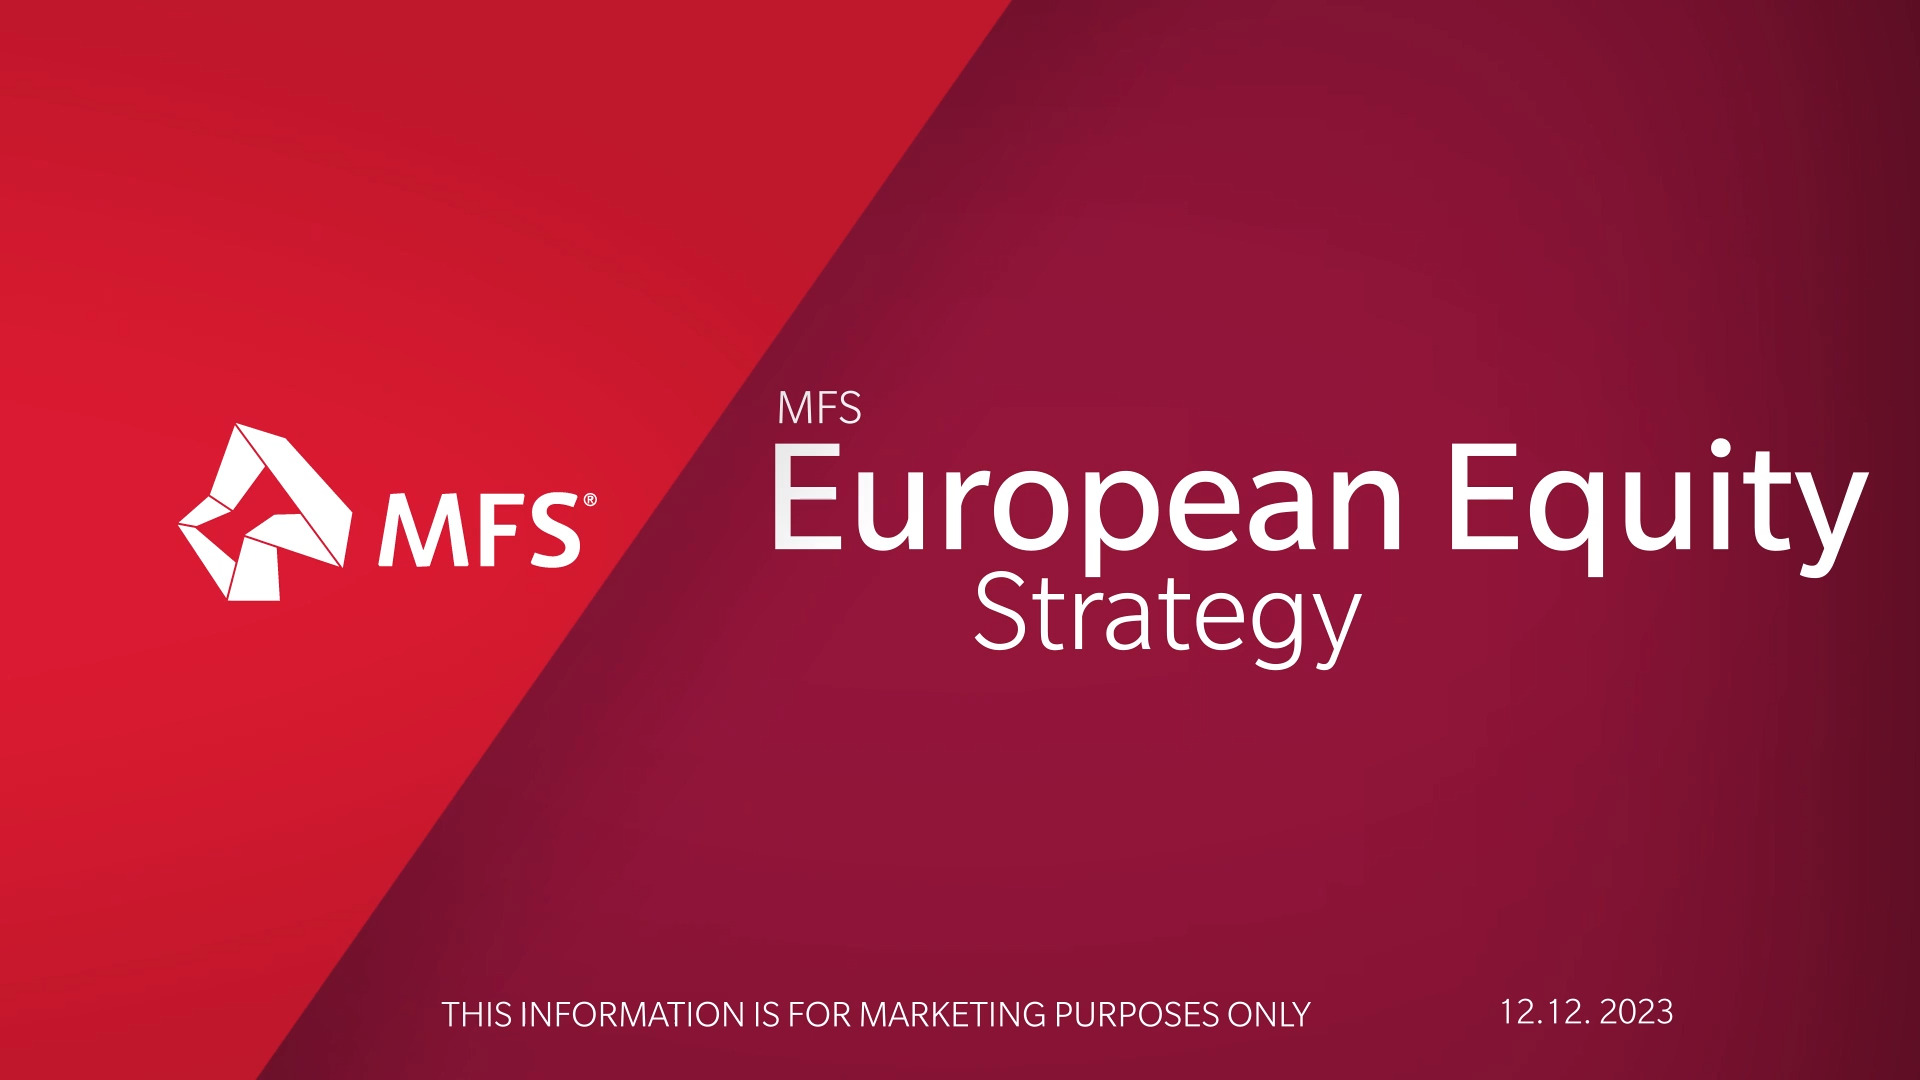 MFS European Equity strategy